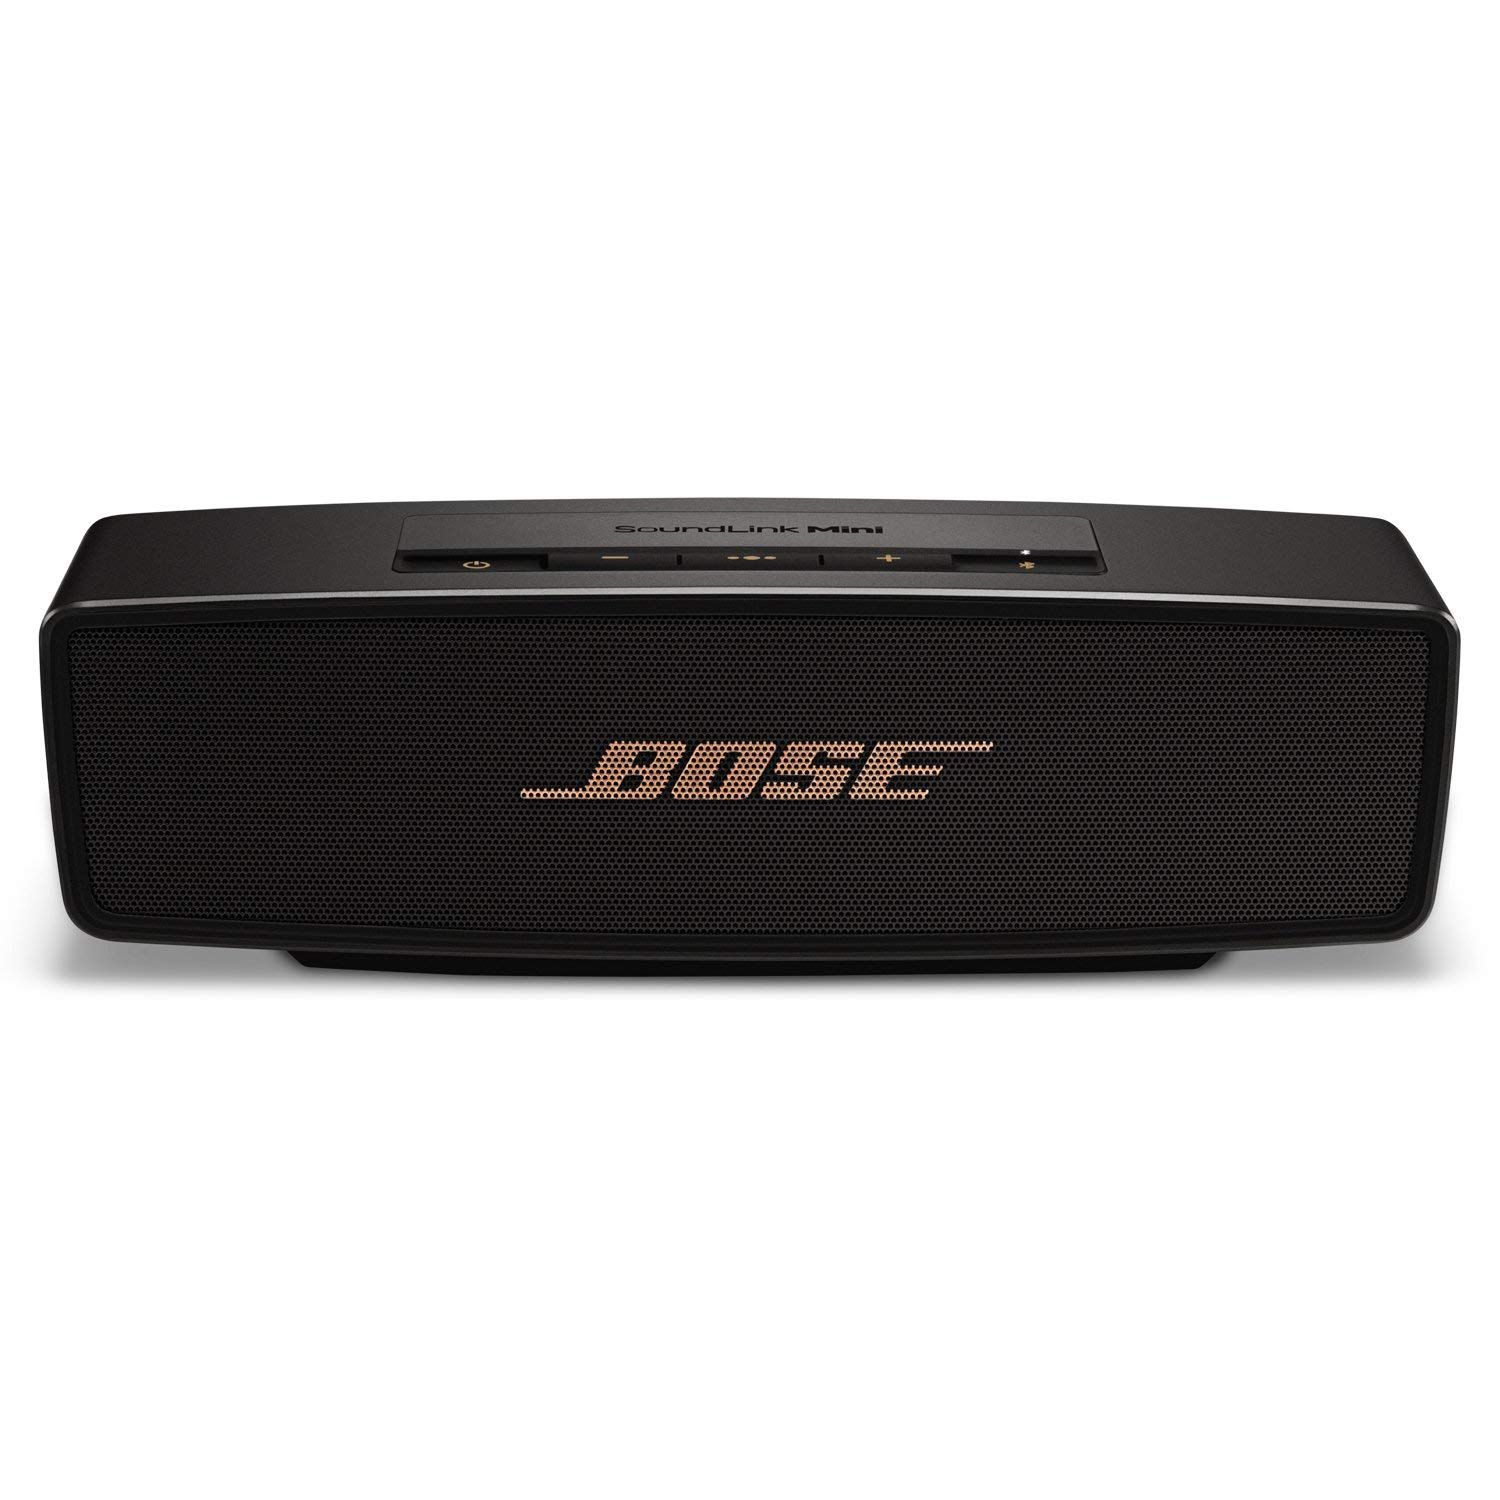  Loa di động Bose soundlink mini 2 limited edition 